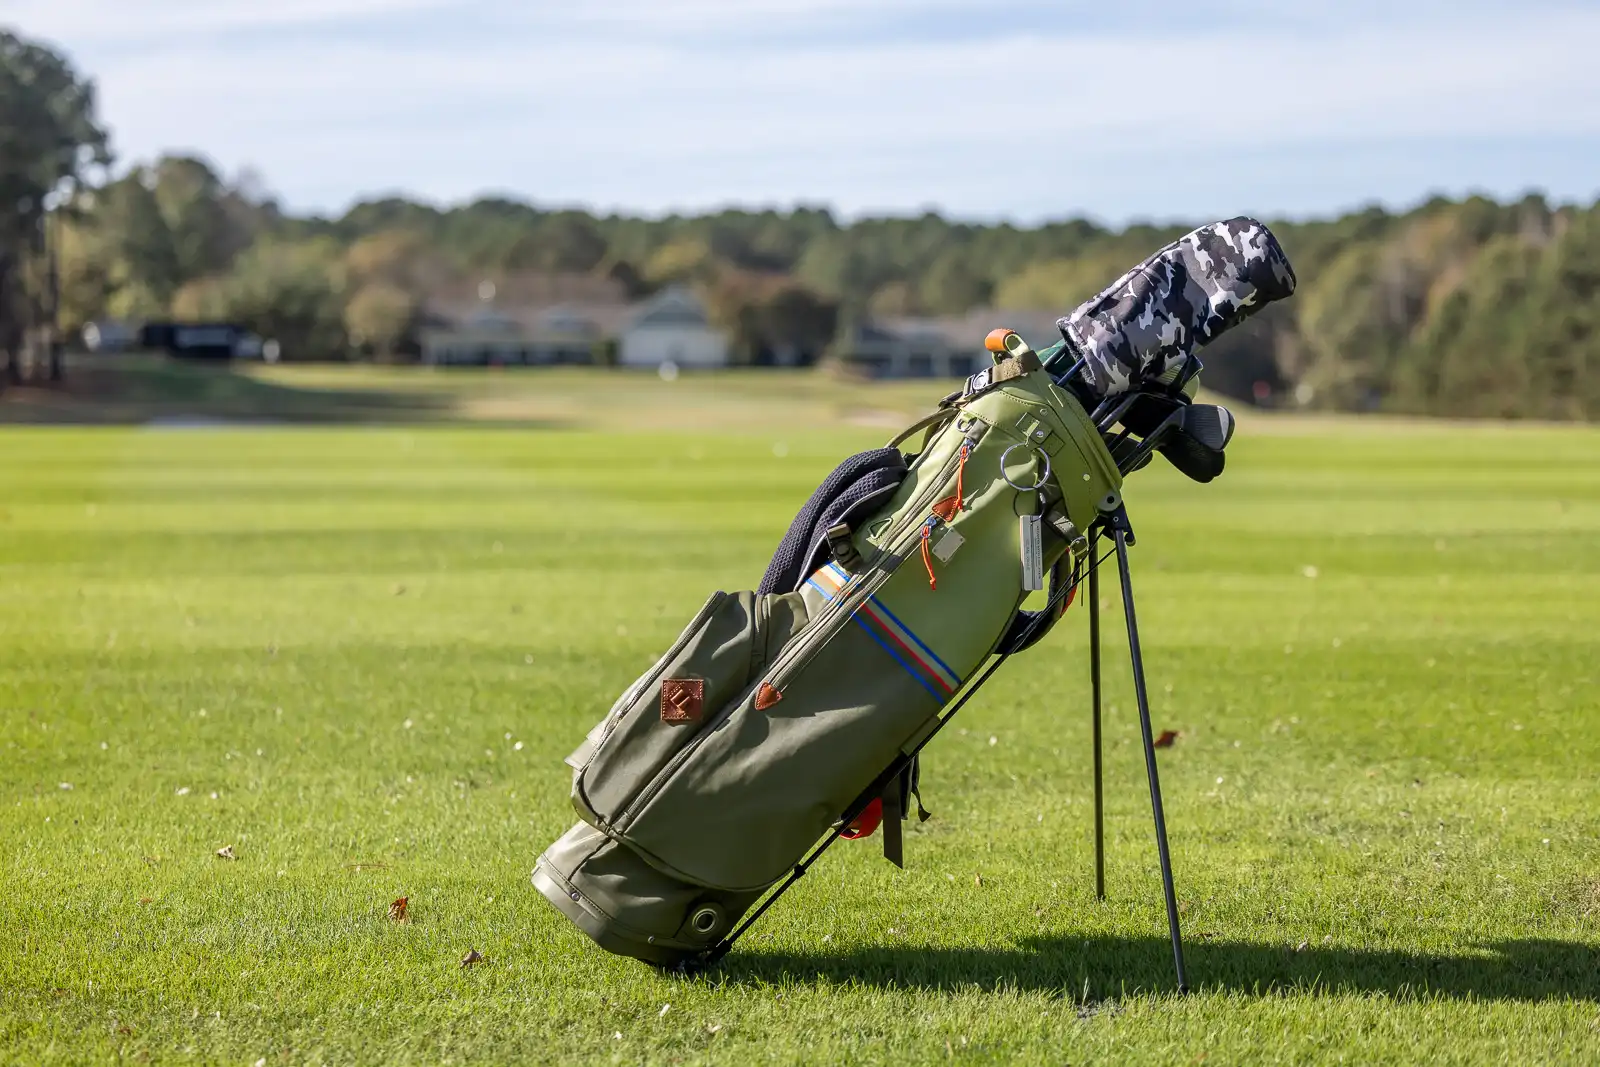 II. The Rise of Luxury Golf Resorts